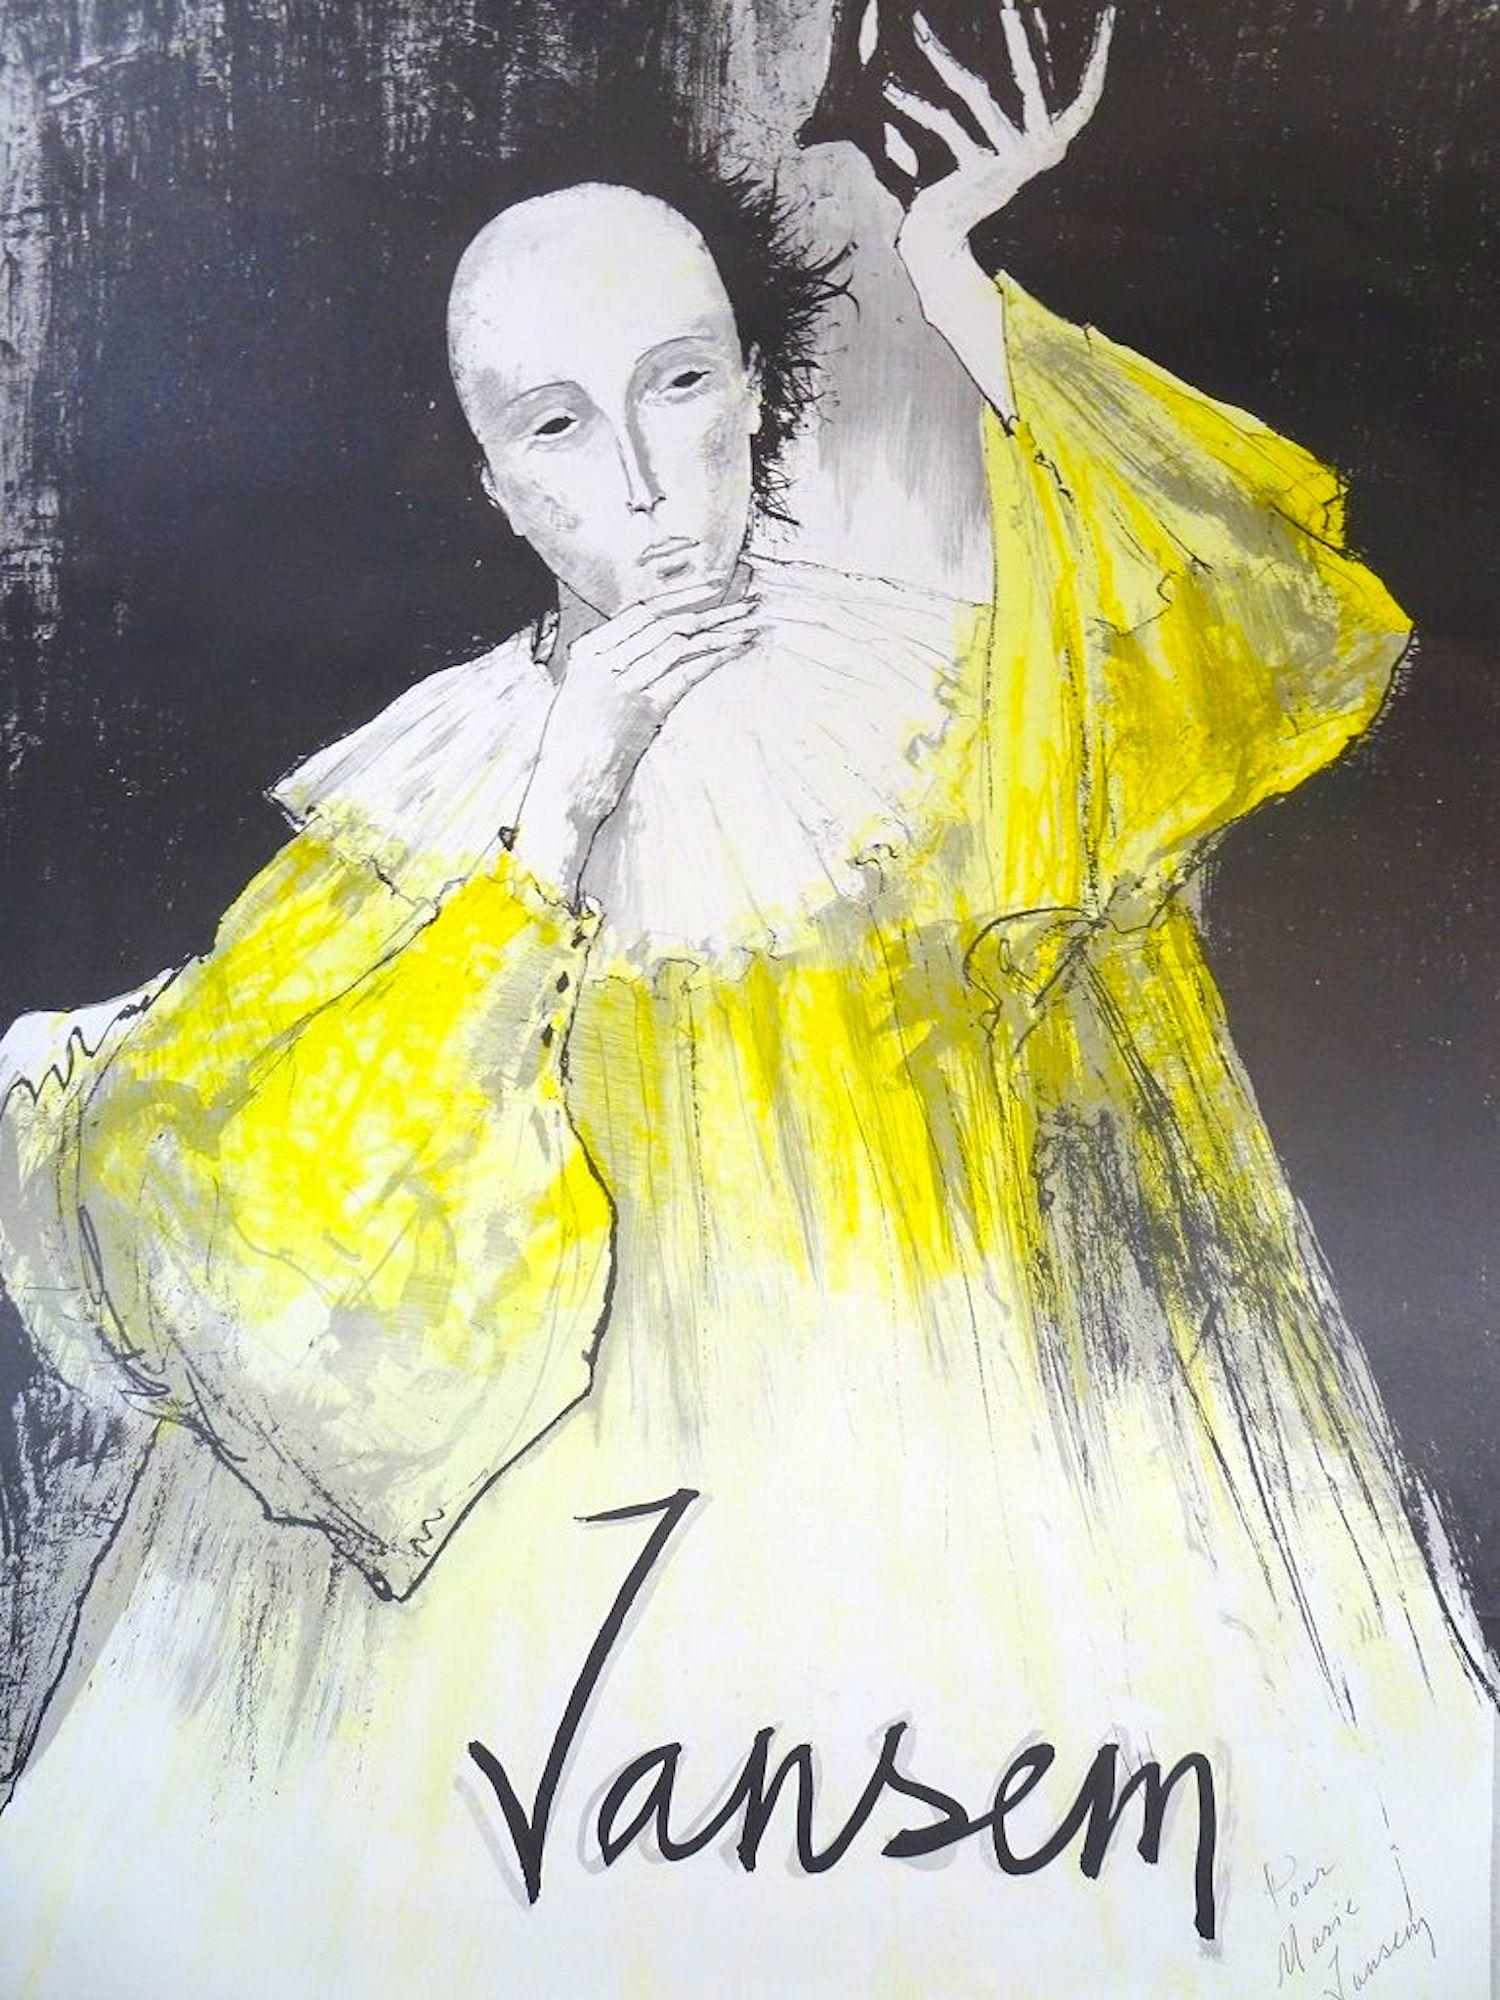 Jean Jansem Figurative Print - Poster Exhibition - Original Poster with Dedication - 1983 